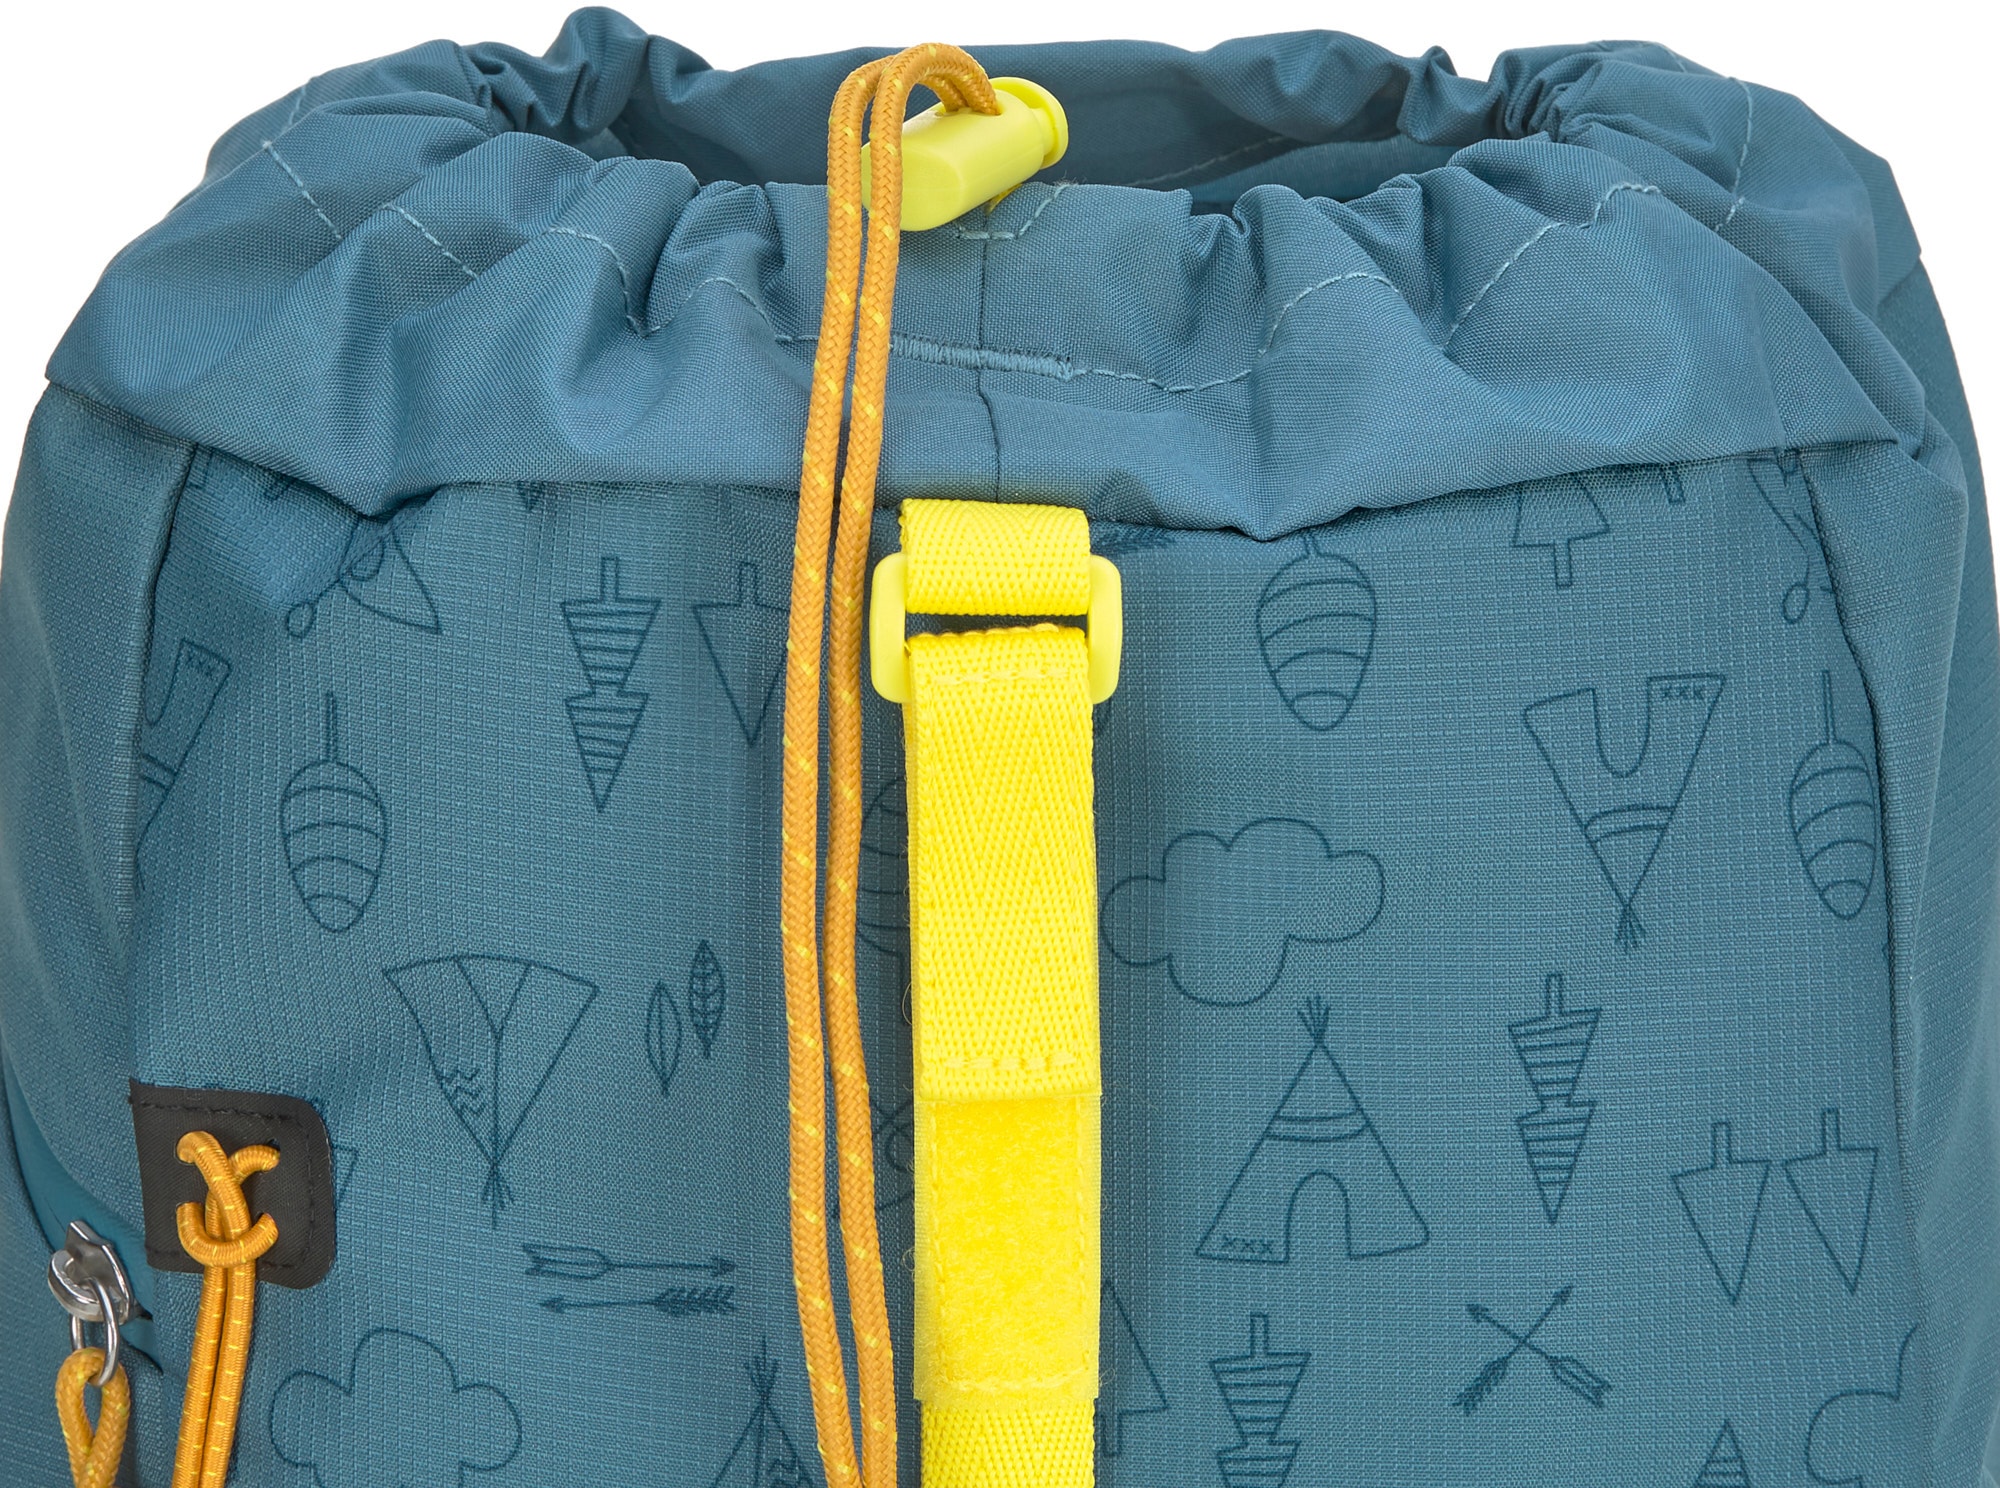 LÄSSIG Kinderrucksack »Adventure, Blue, Mini Backpack«, Reflektoren, inkl. Sitzunterlage; PETA-approved vegan; aus recyceltem Material